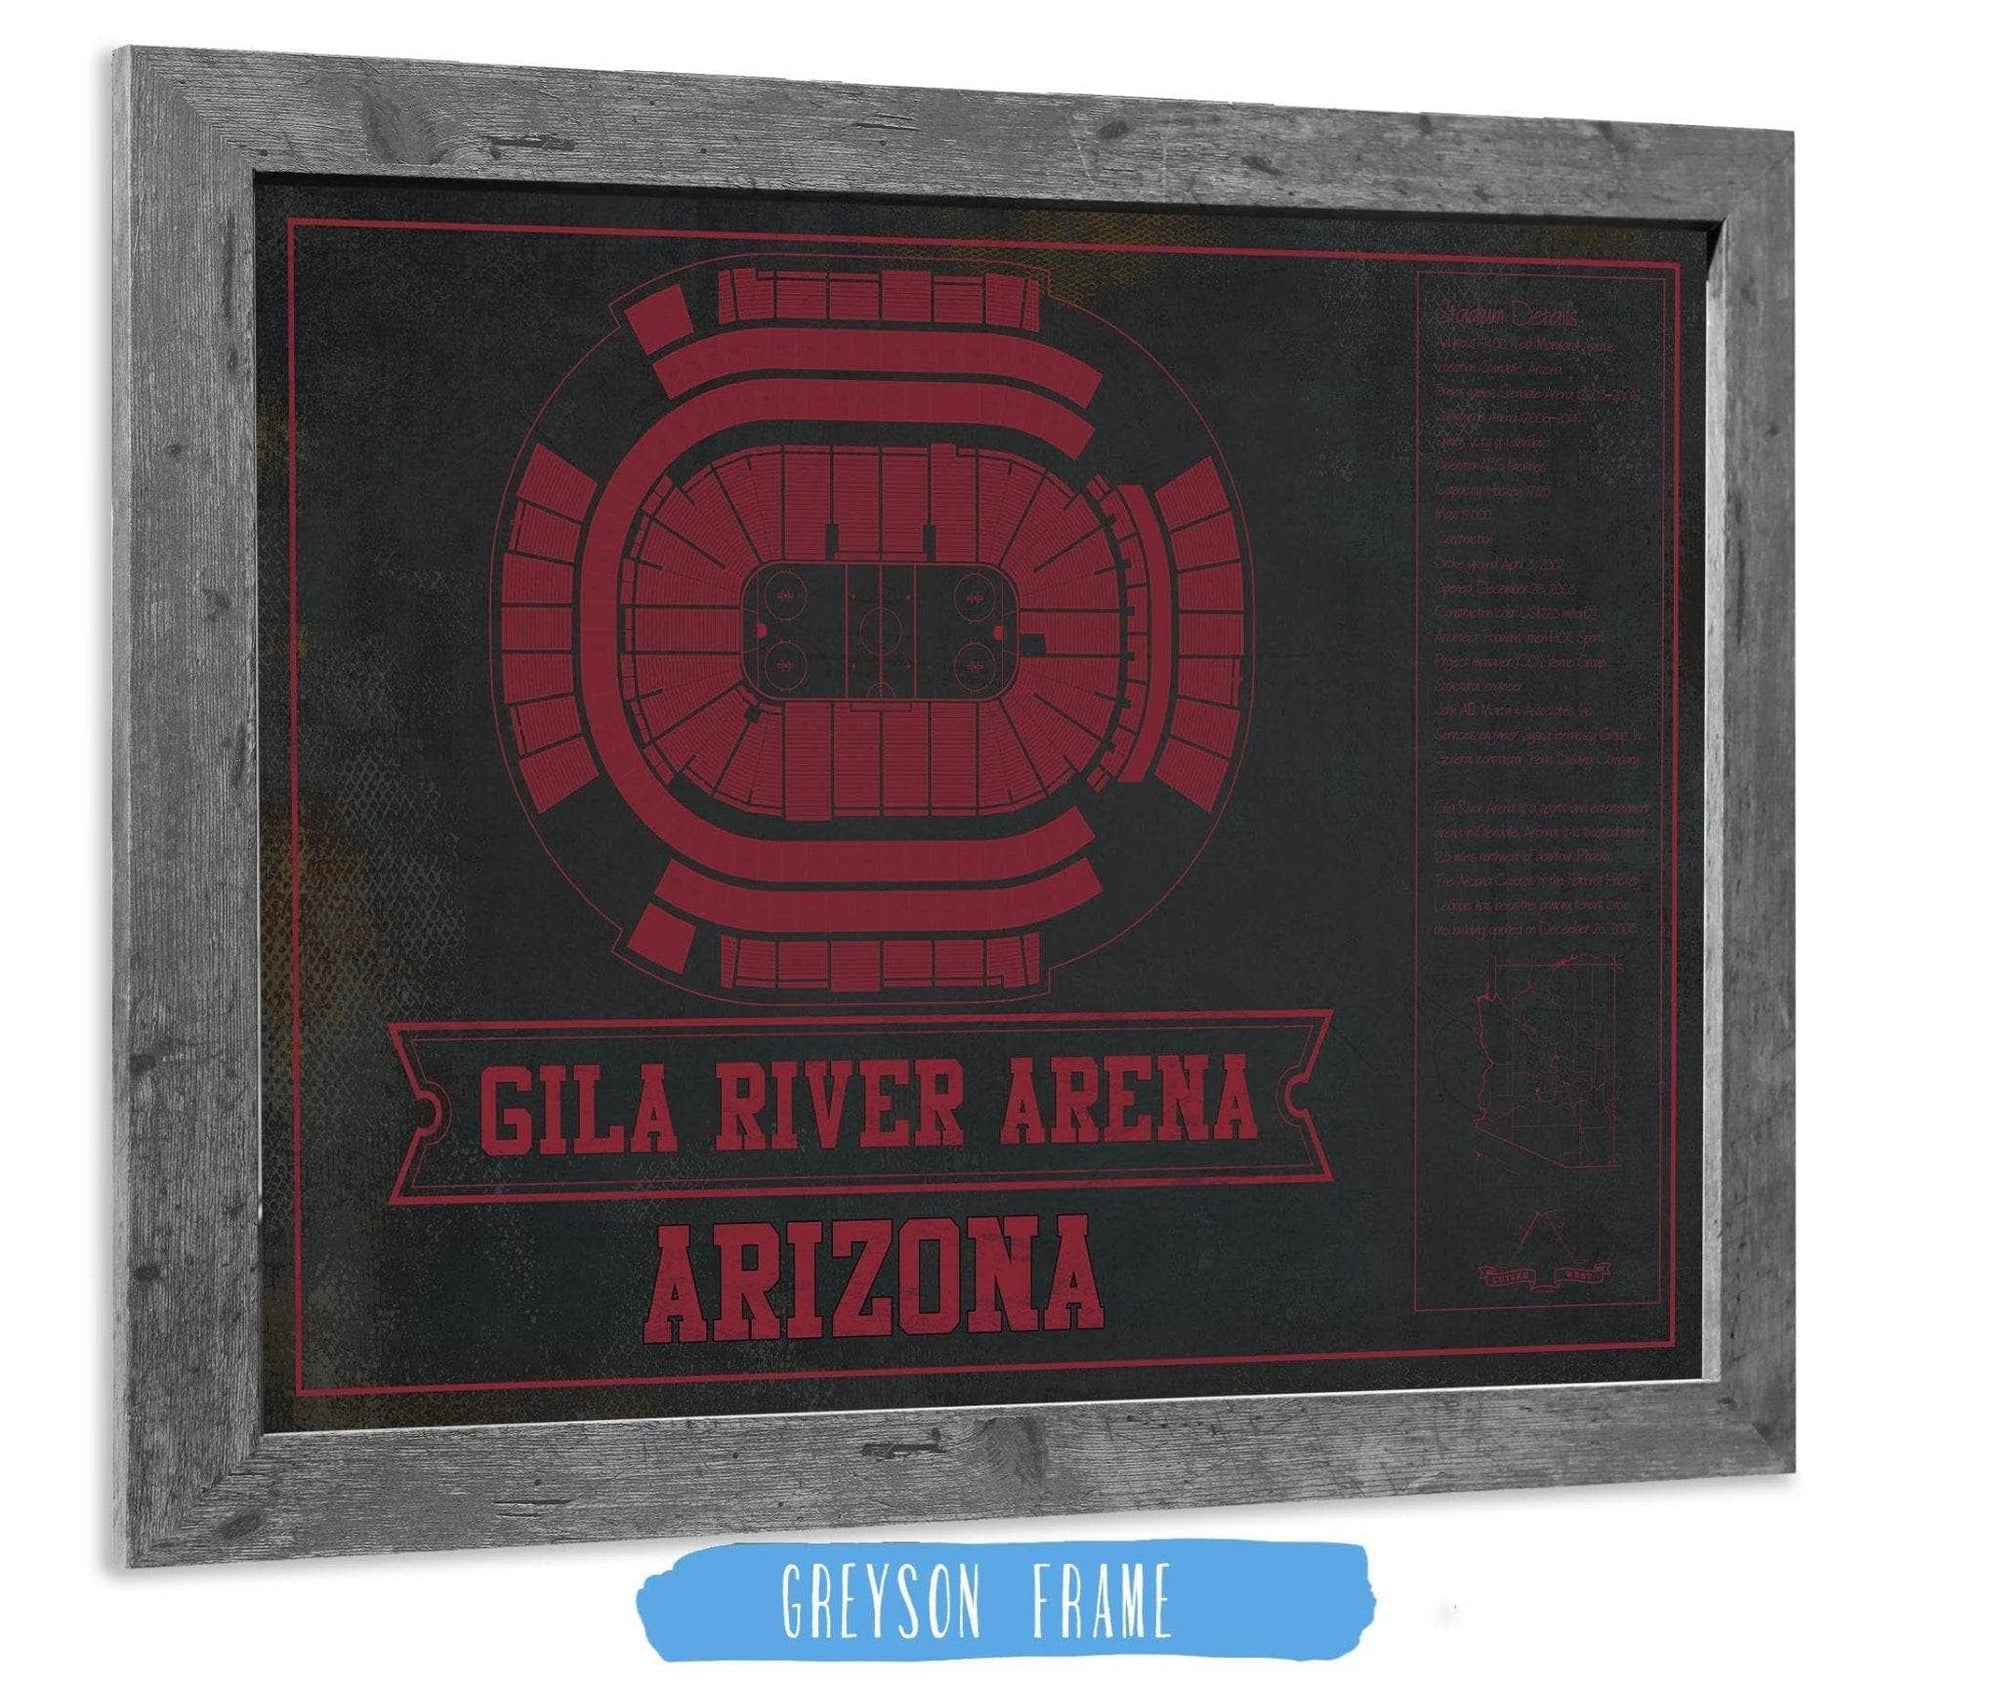 Cutler West 14" x 11" / Greyson Frame Arizona Coyotes Team Colors - Gila River Arena Vintage Hockey Blueprint NHL Print 933350182_78418